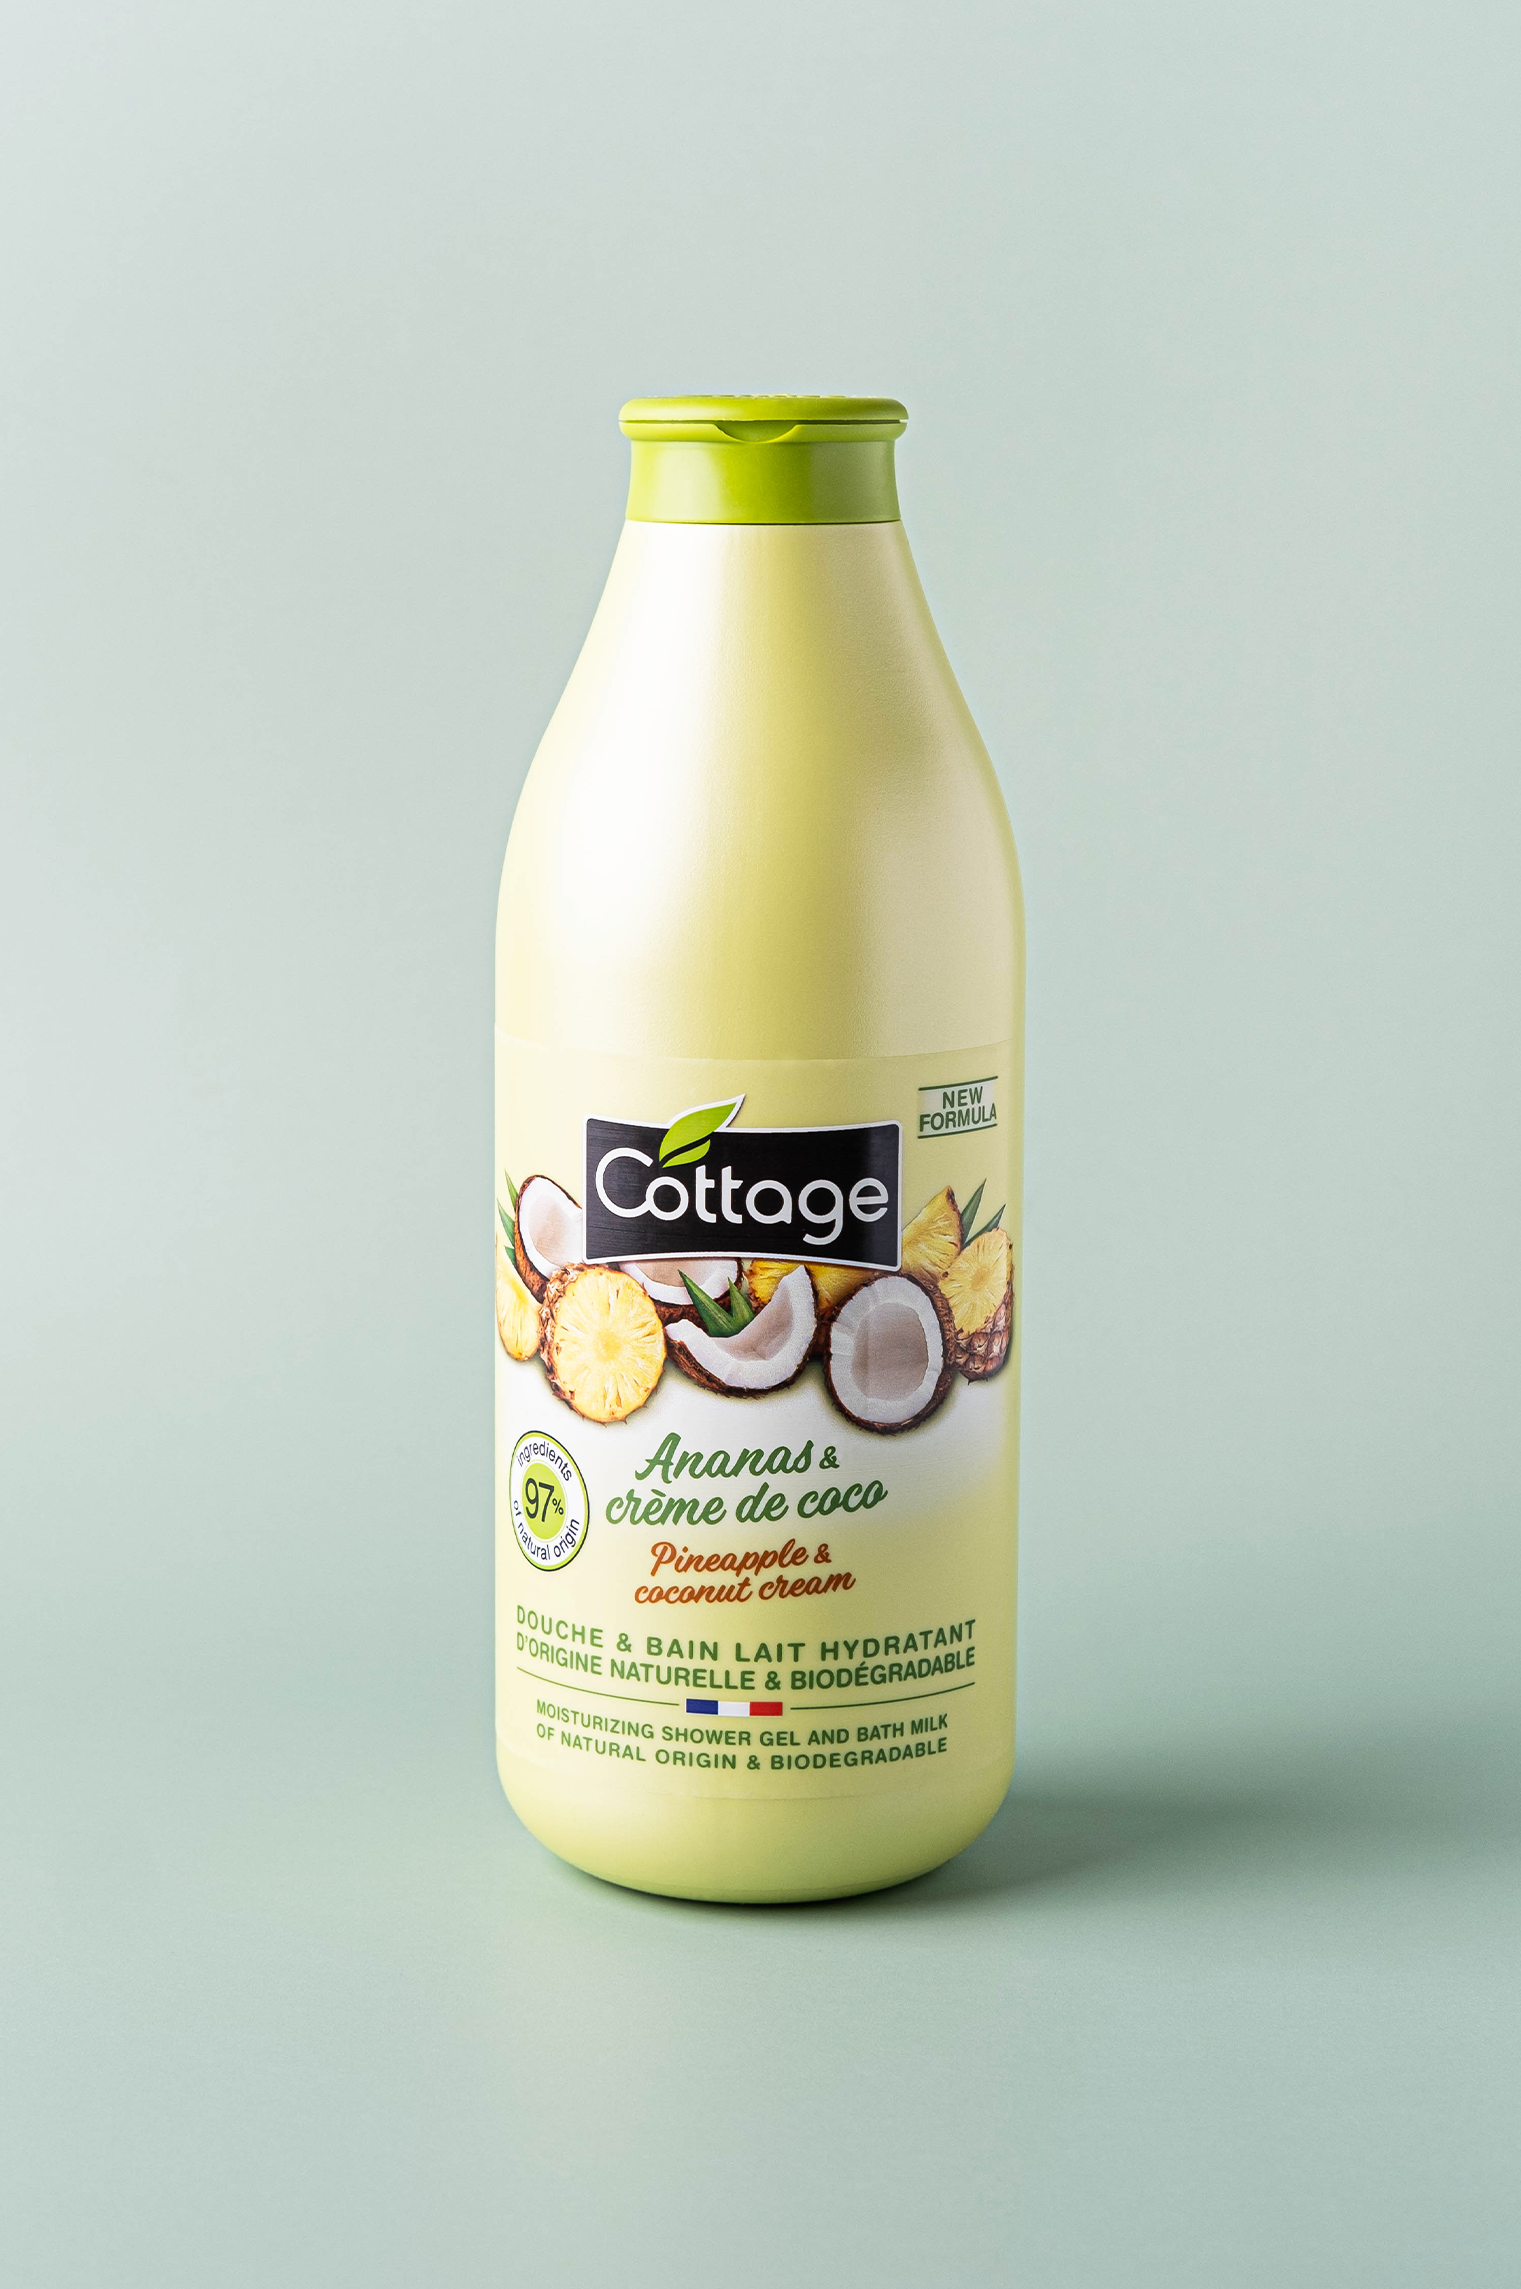 Pineapple & Coconut Cream Shower Milk